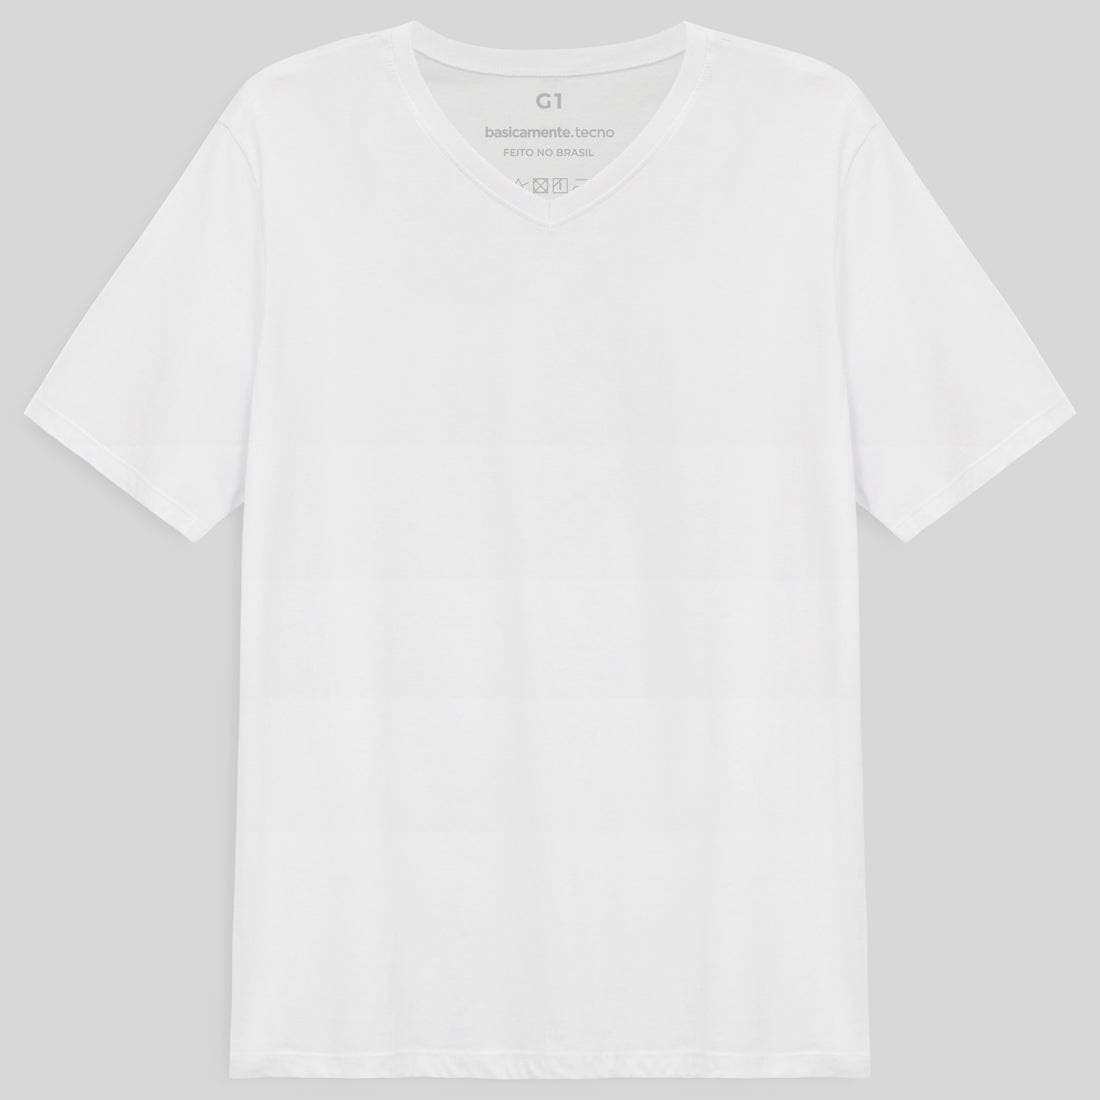 Tech T-Shirt Anti Odor Gola V Plus Size Masculina - Branco